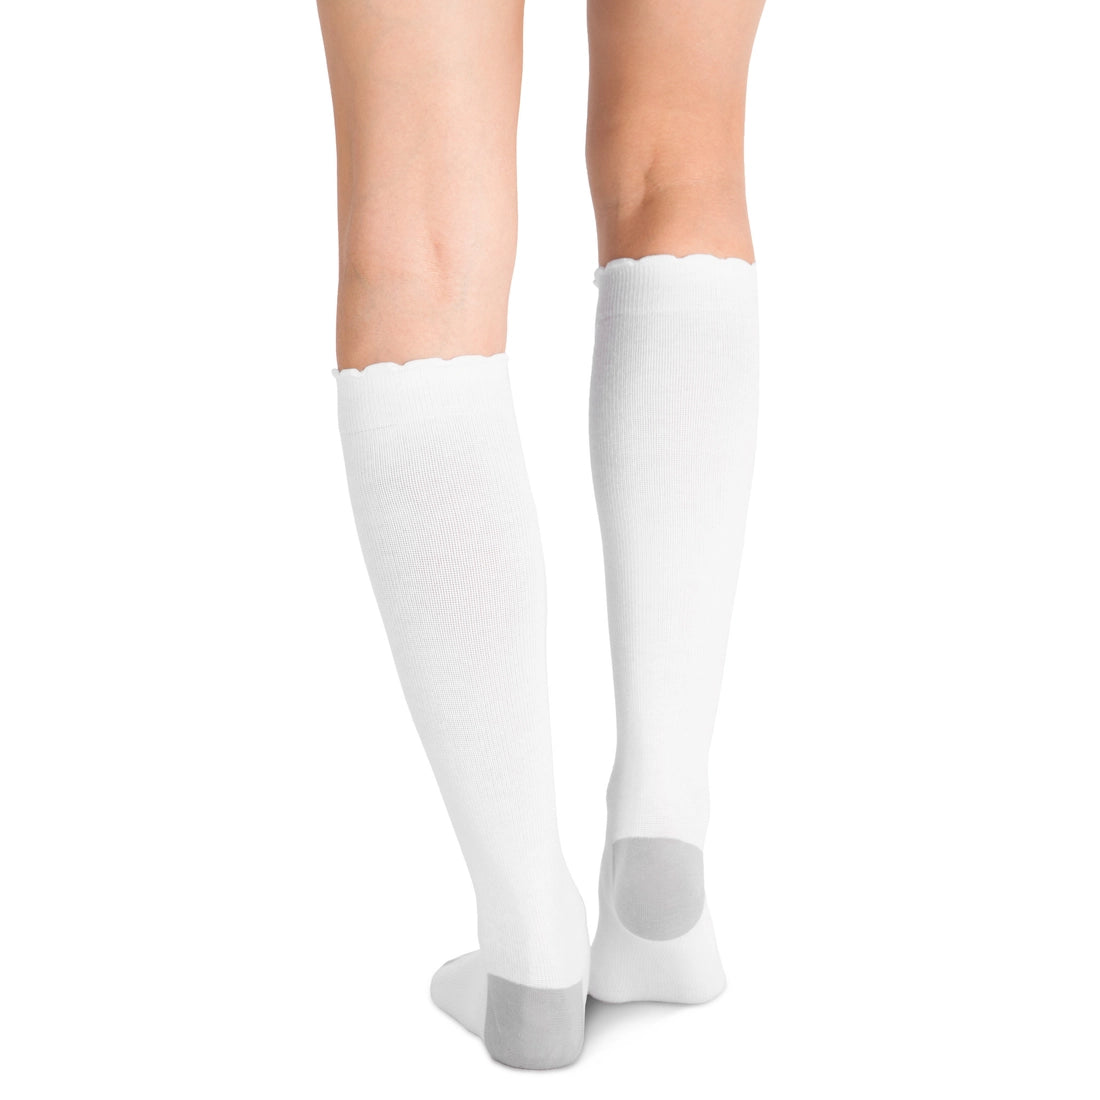 White/Grey Compression Socks